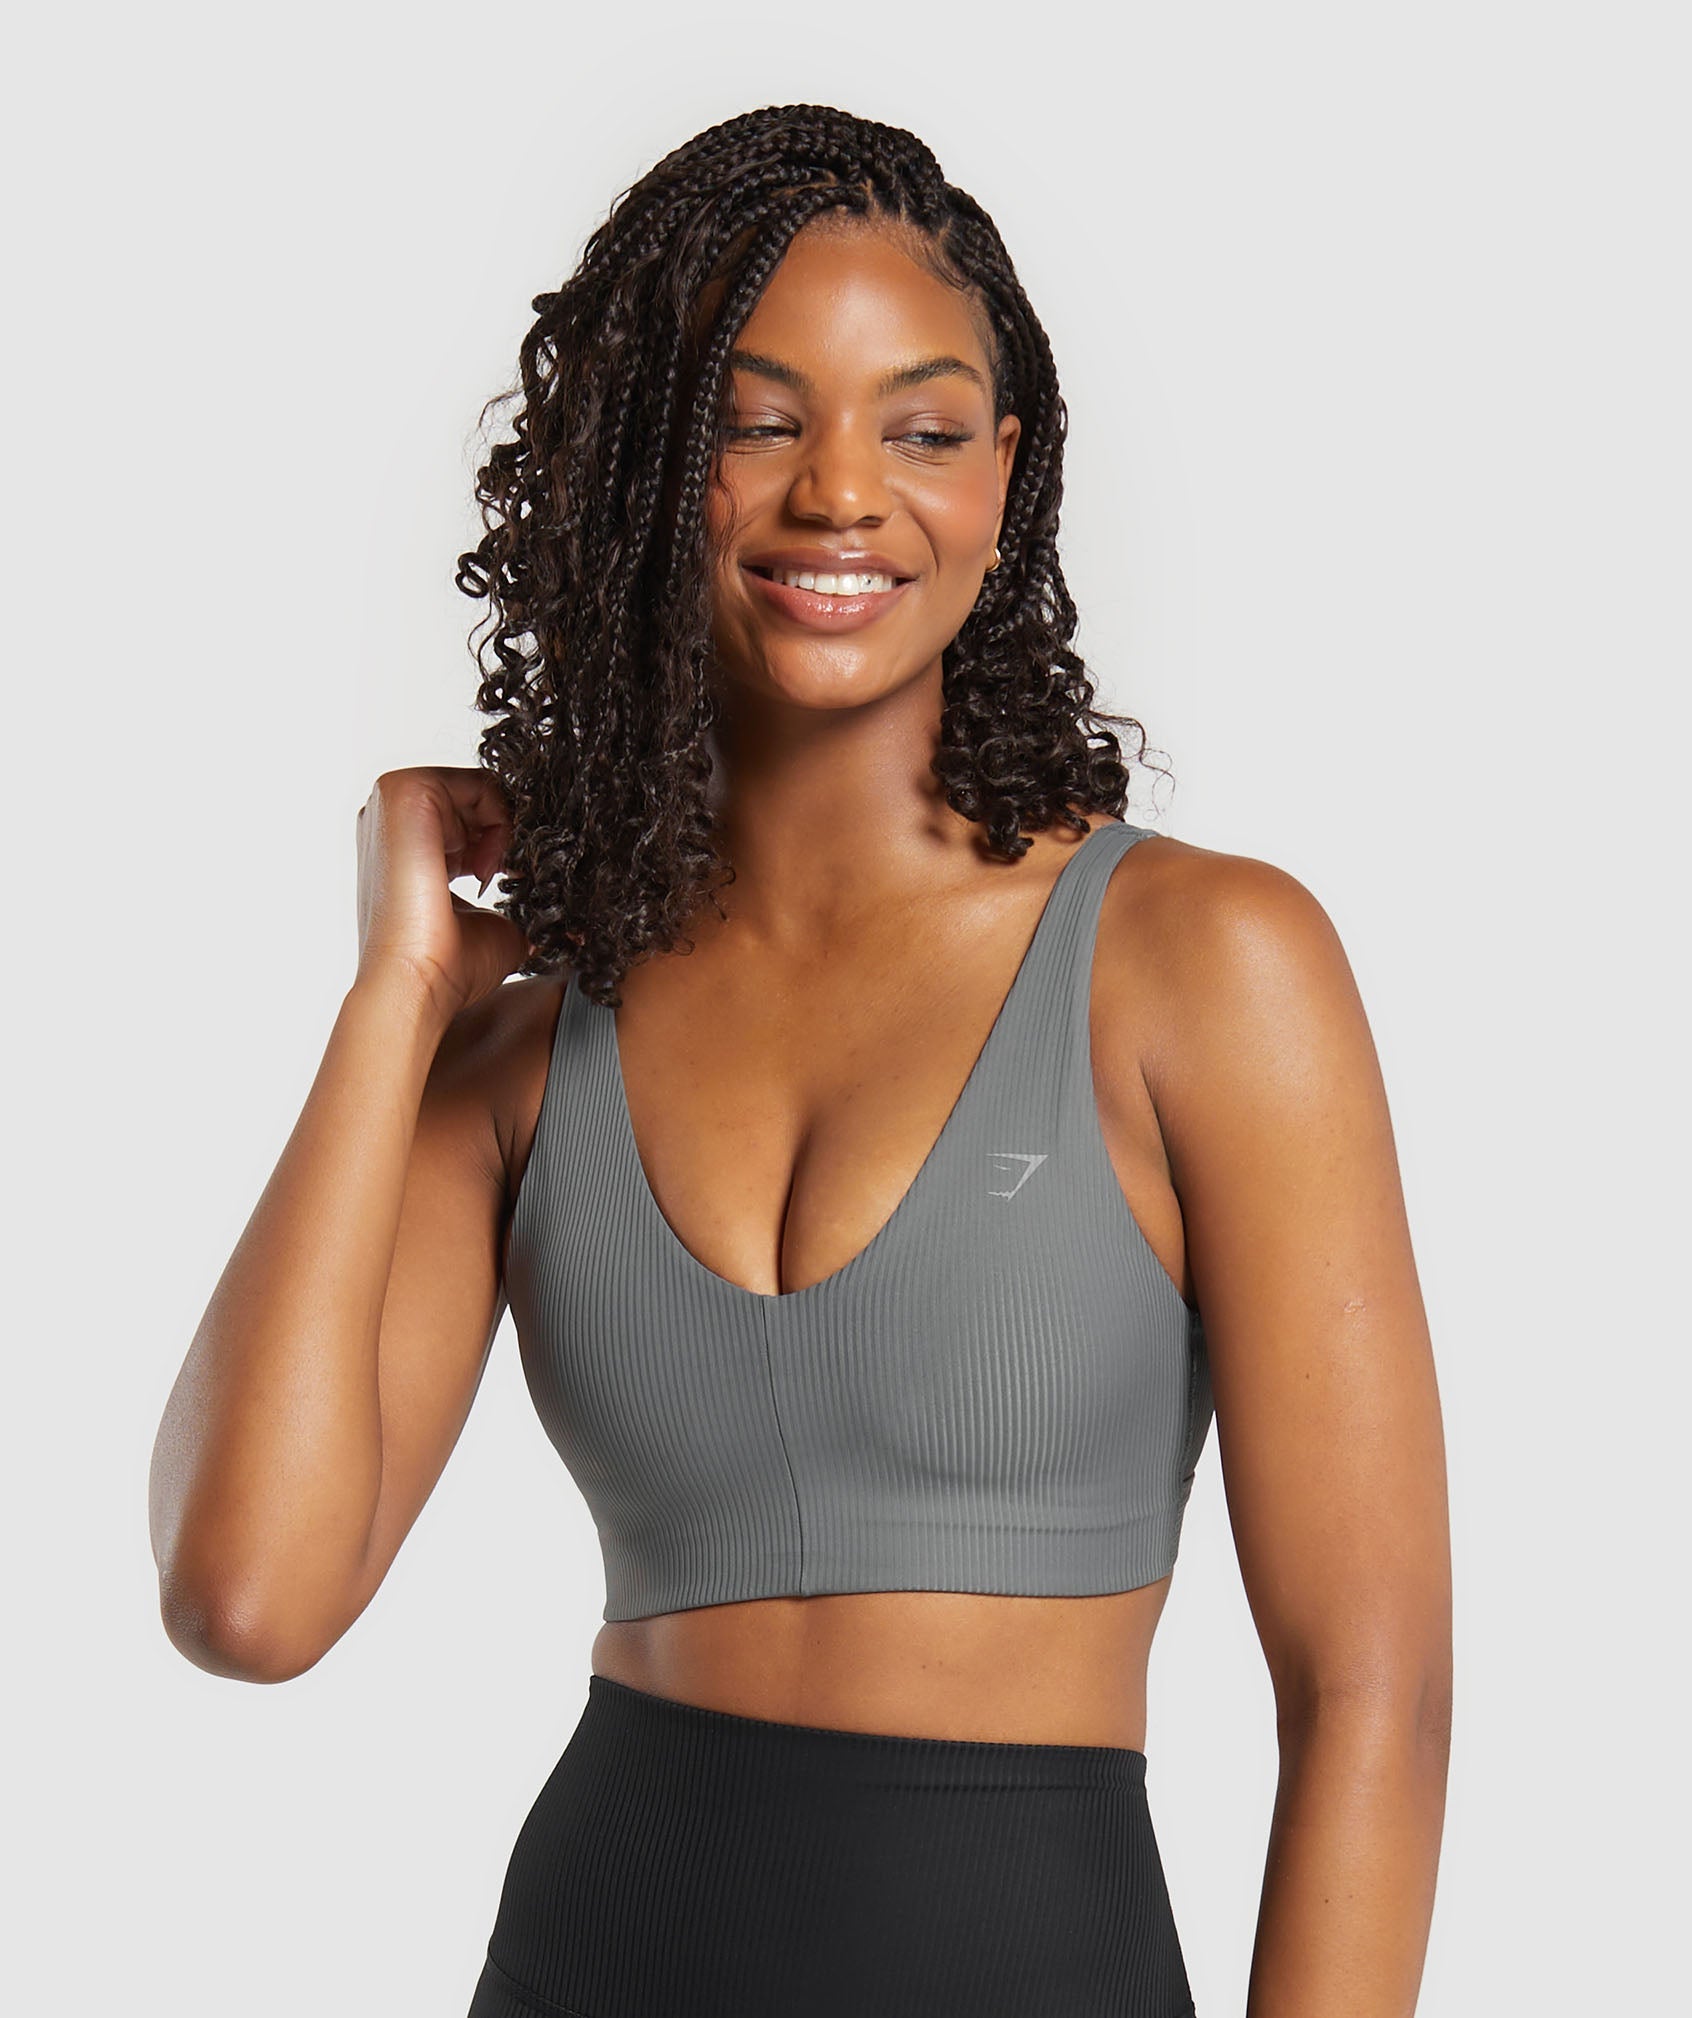 Women's Sports Bra - Breathable Nylon Gymshark Bandeau Top For